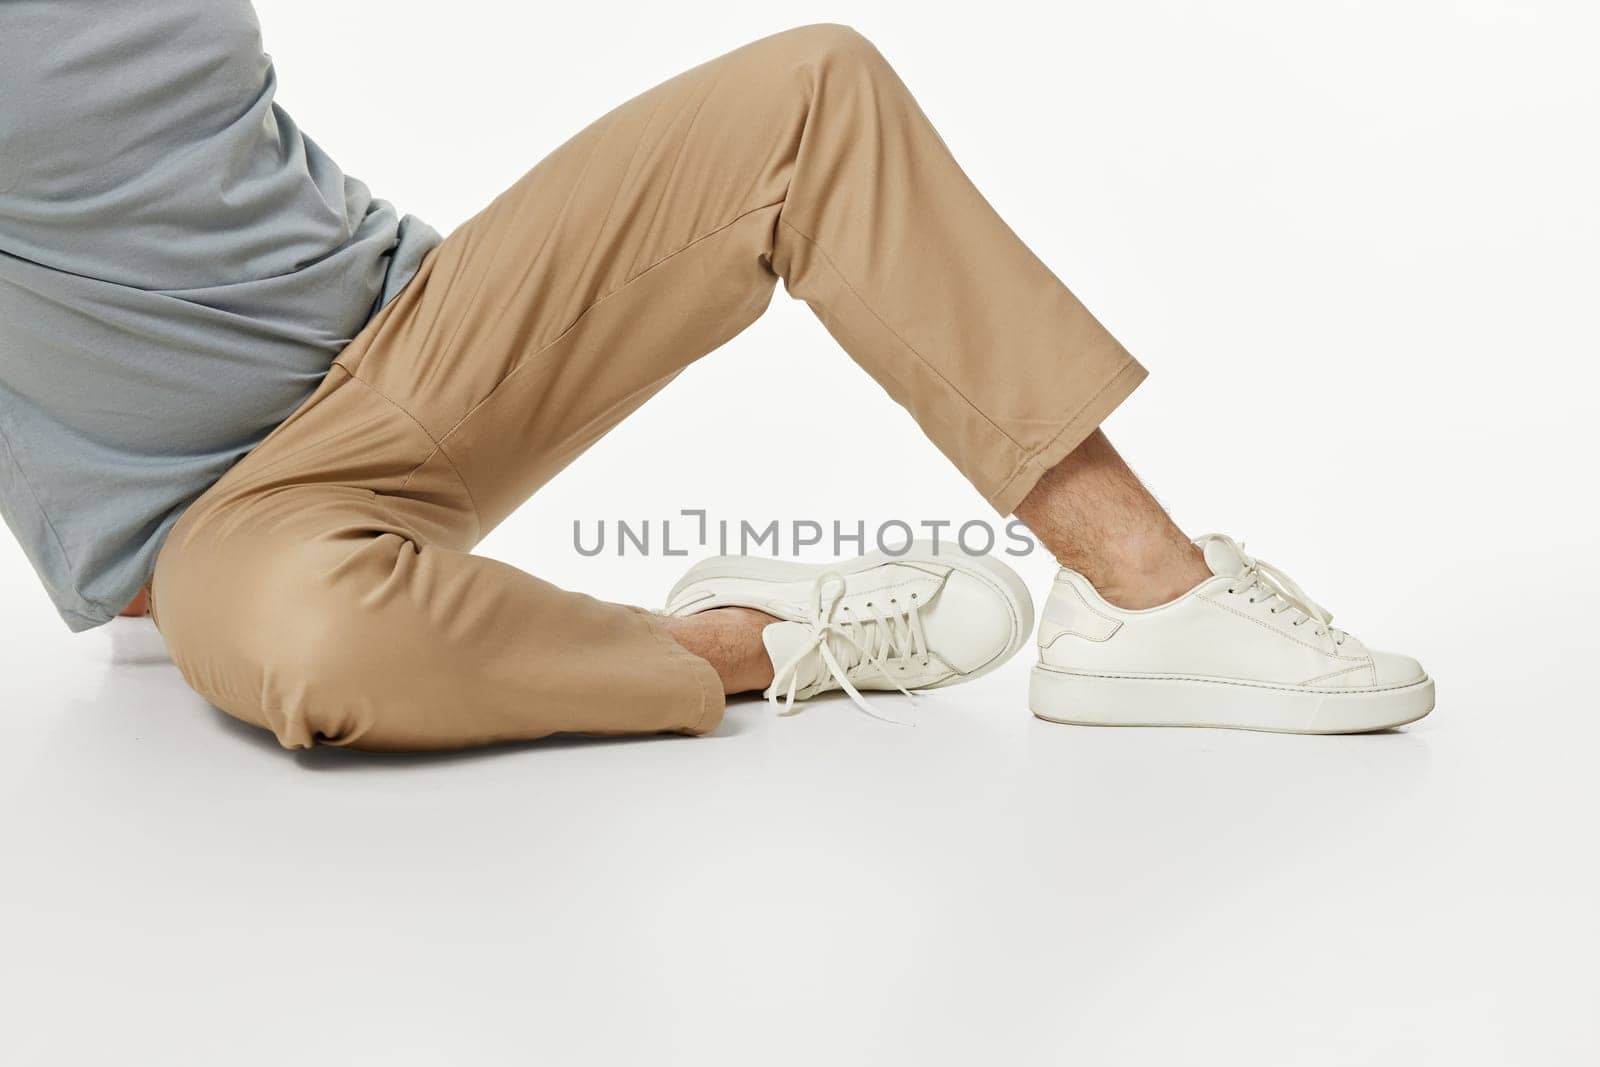 man wearing white sneakers and beige pants sitting on floor